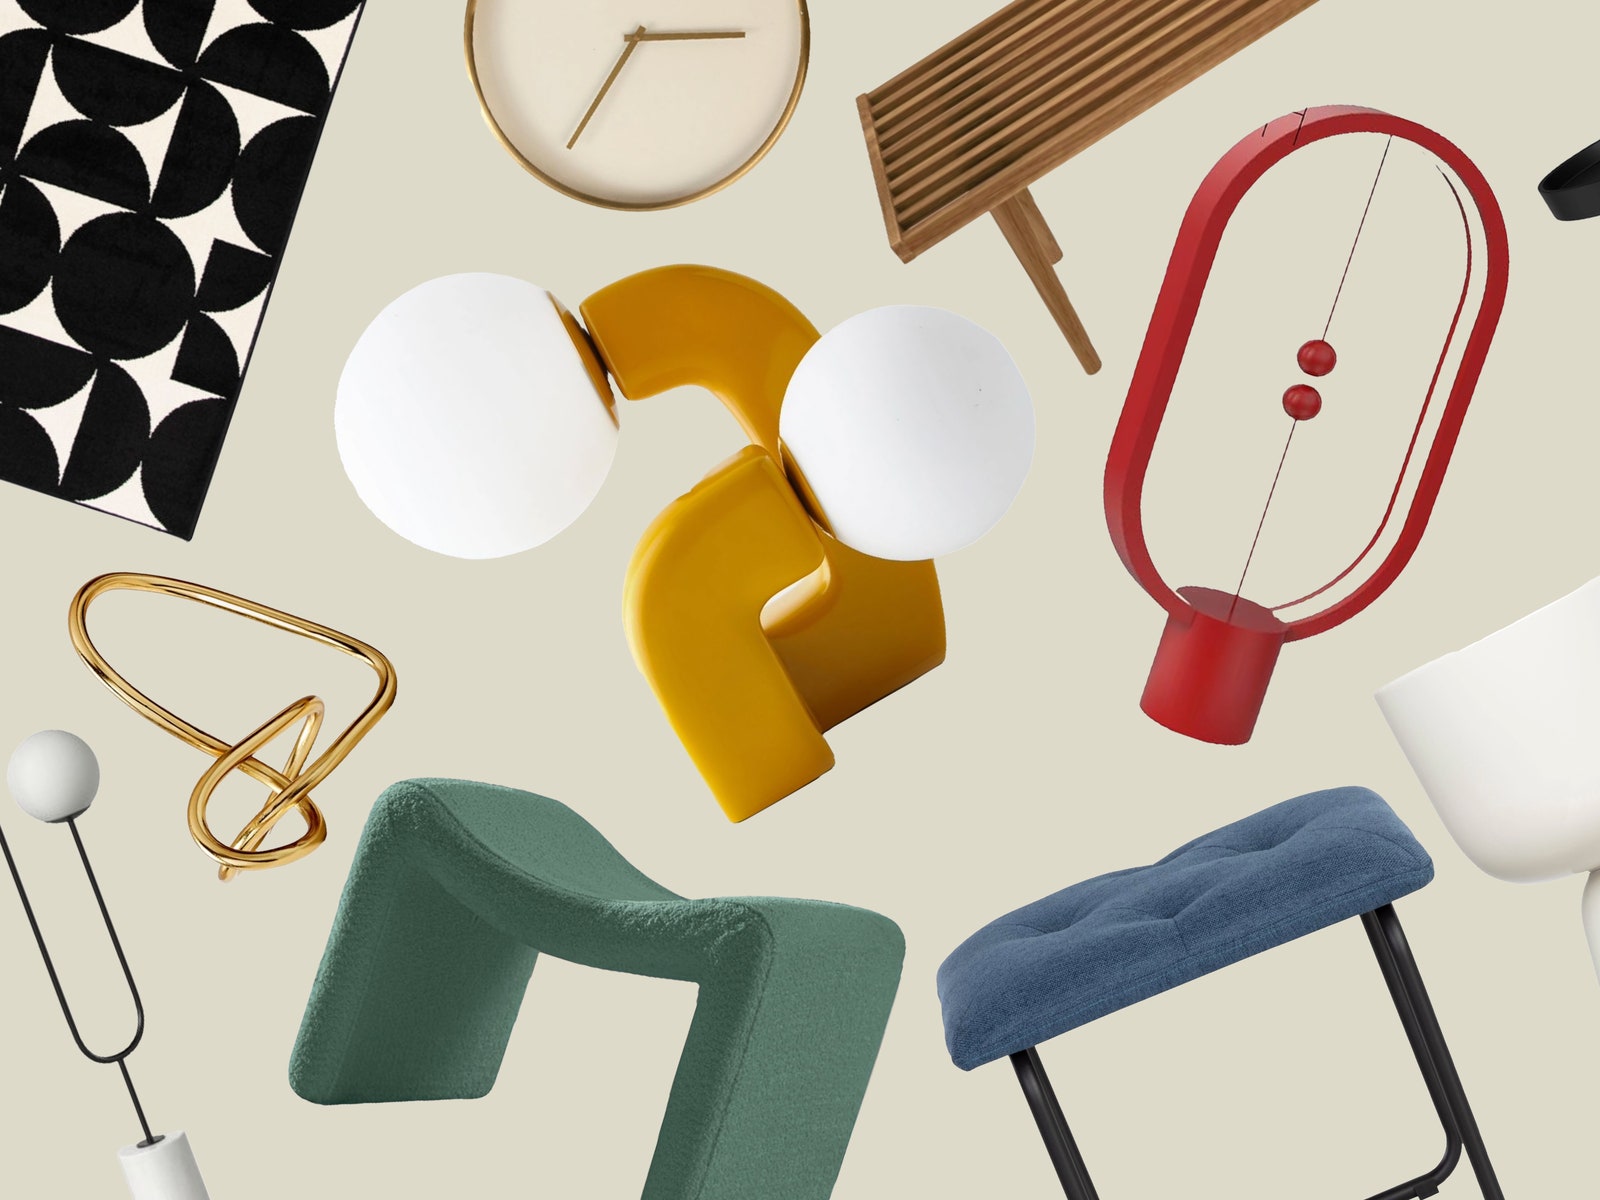 27 Contemporary Bauhaus Furniture and Decor Ideas That’ll Run You Less Than $300